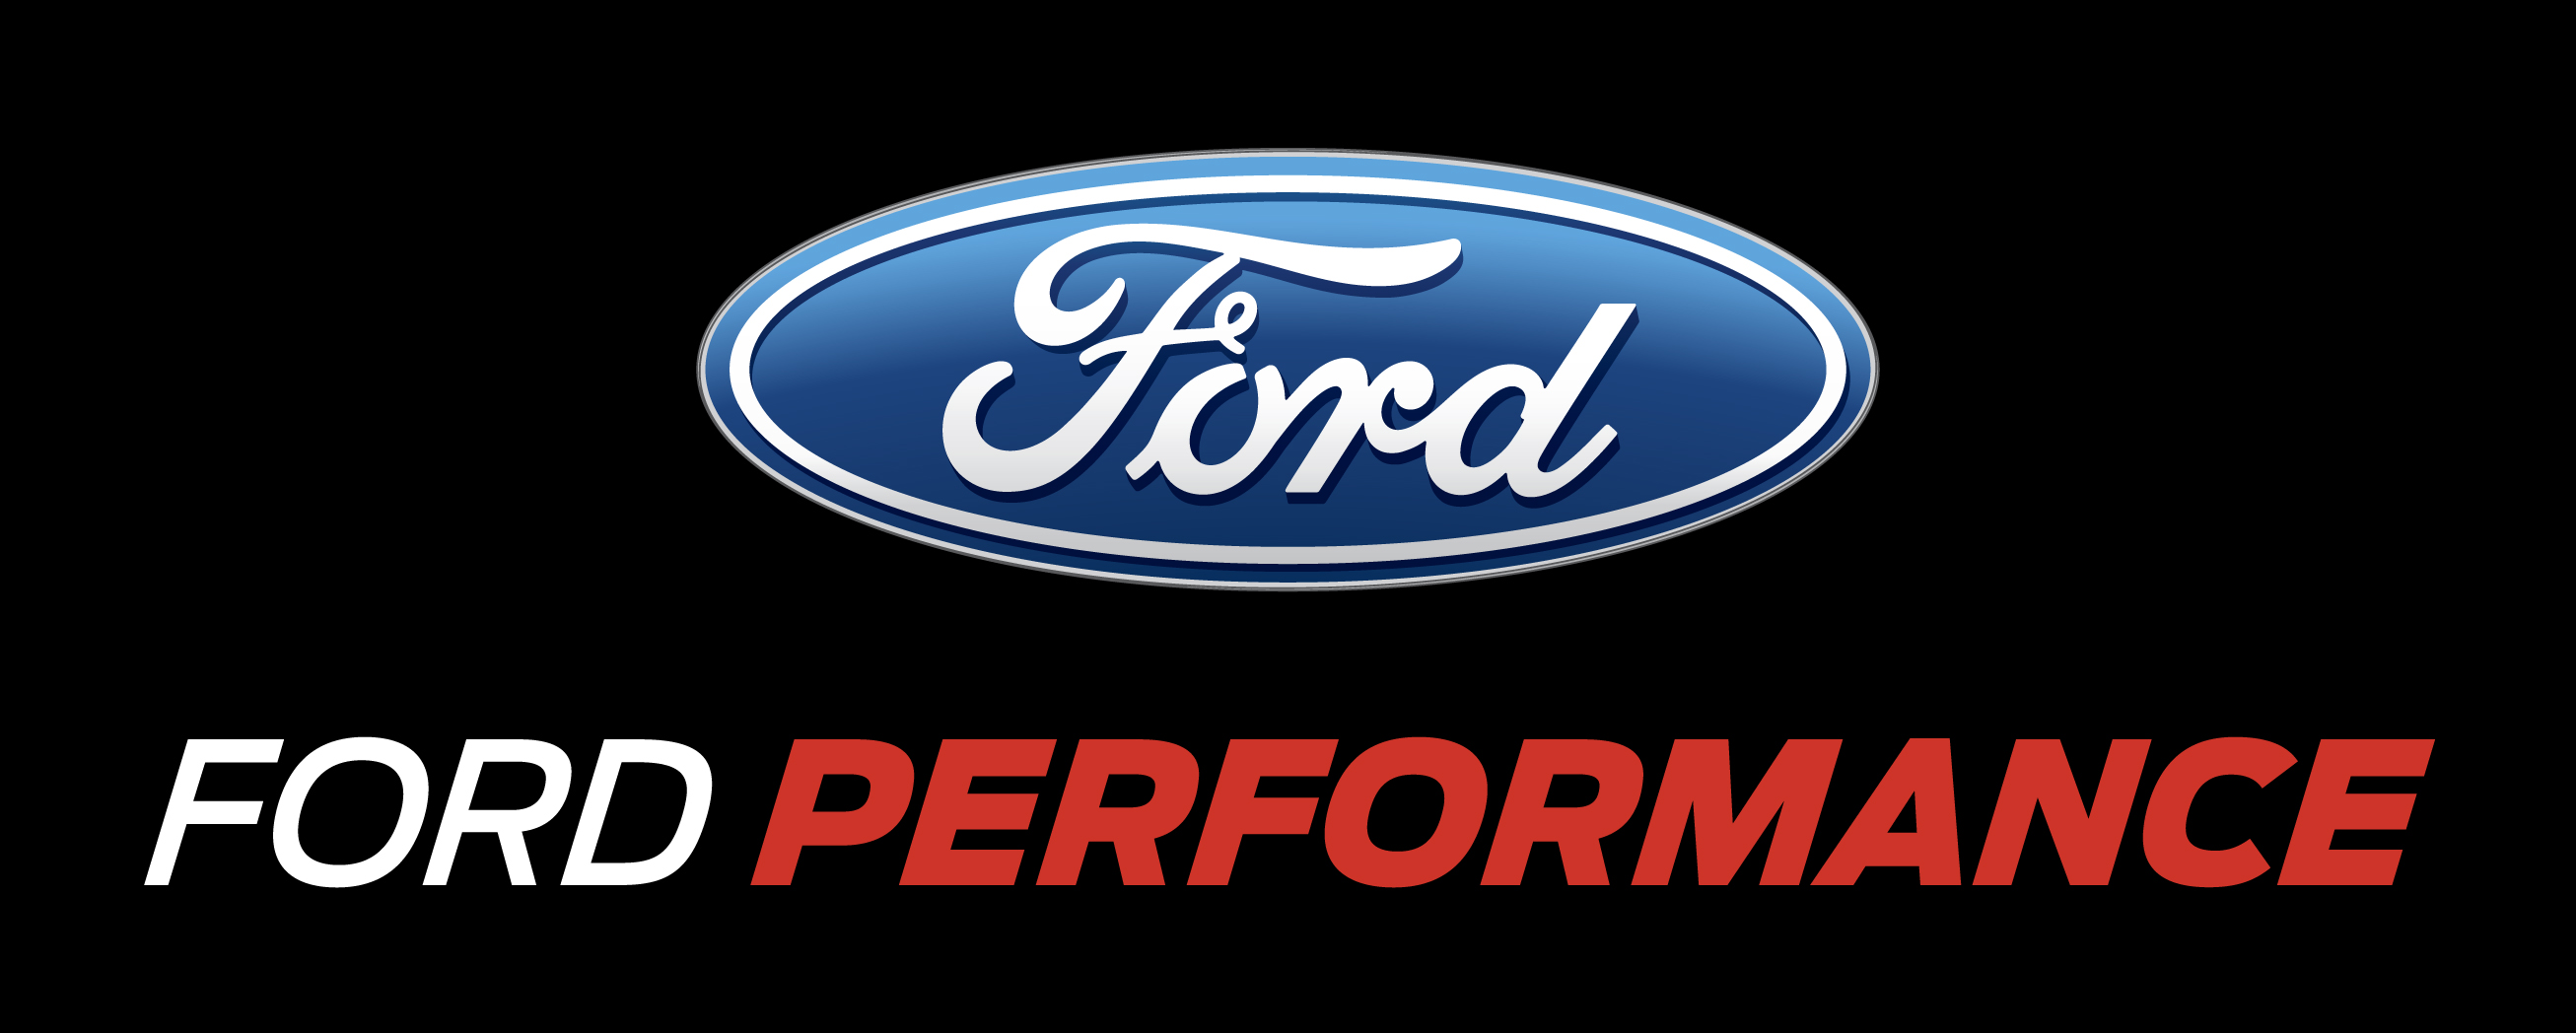 Ford performance Logos